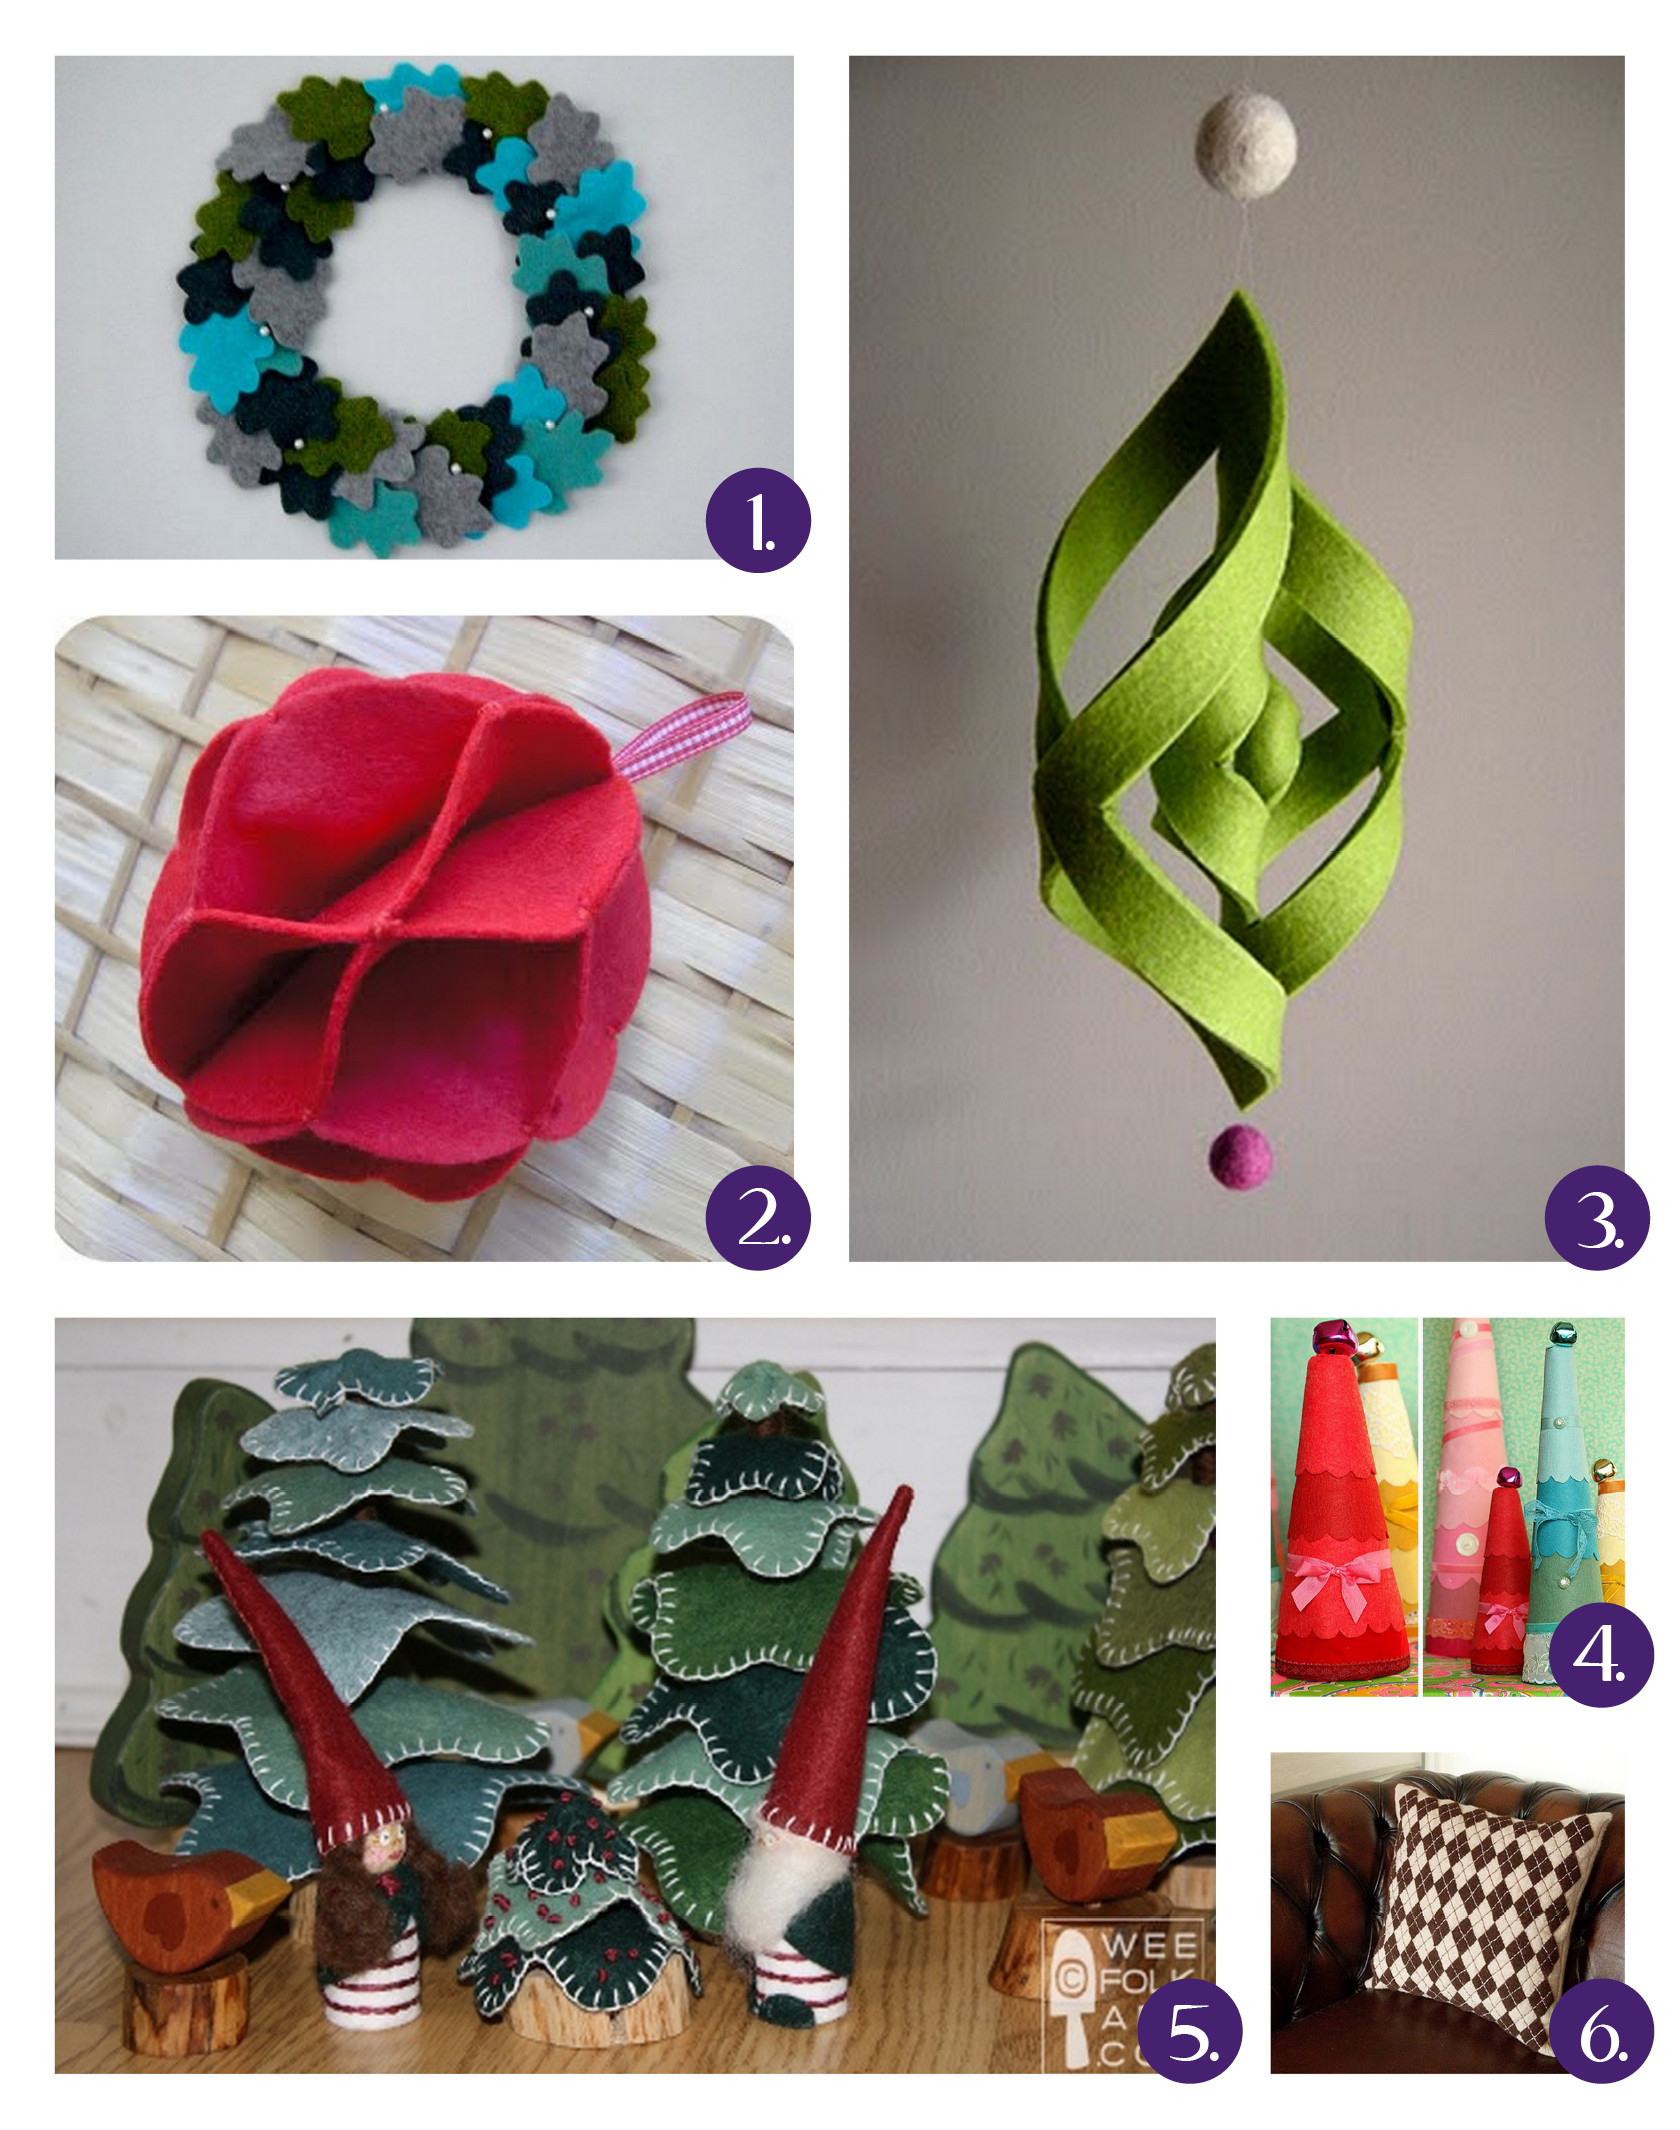 Best ideas about DIY Felt Christmas Ornaments
. Save or Pin DIY Christmas Felt Crafts Now.